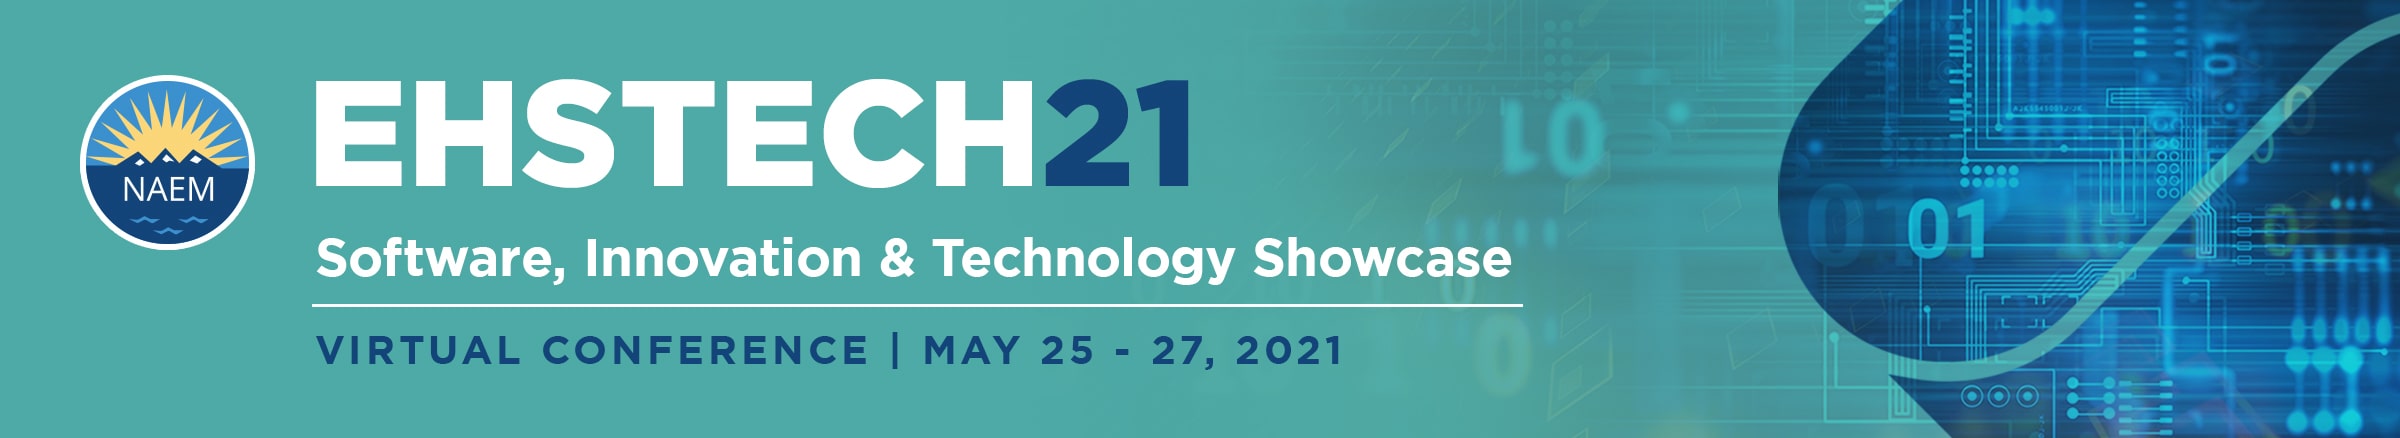 EHSTECH21 | Software, Innovation & Technology Showcase